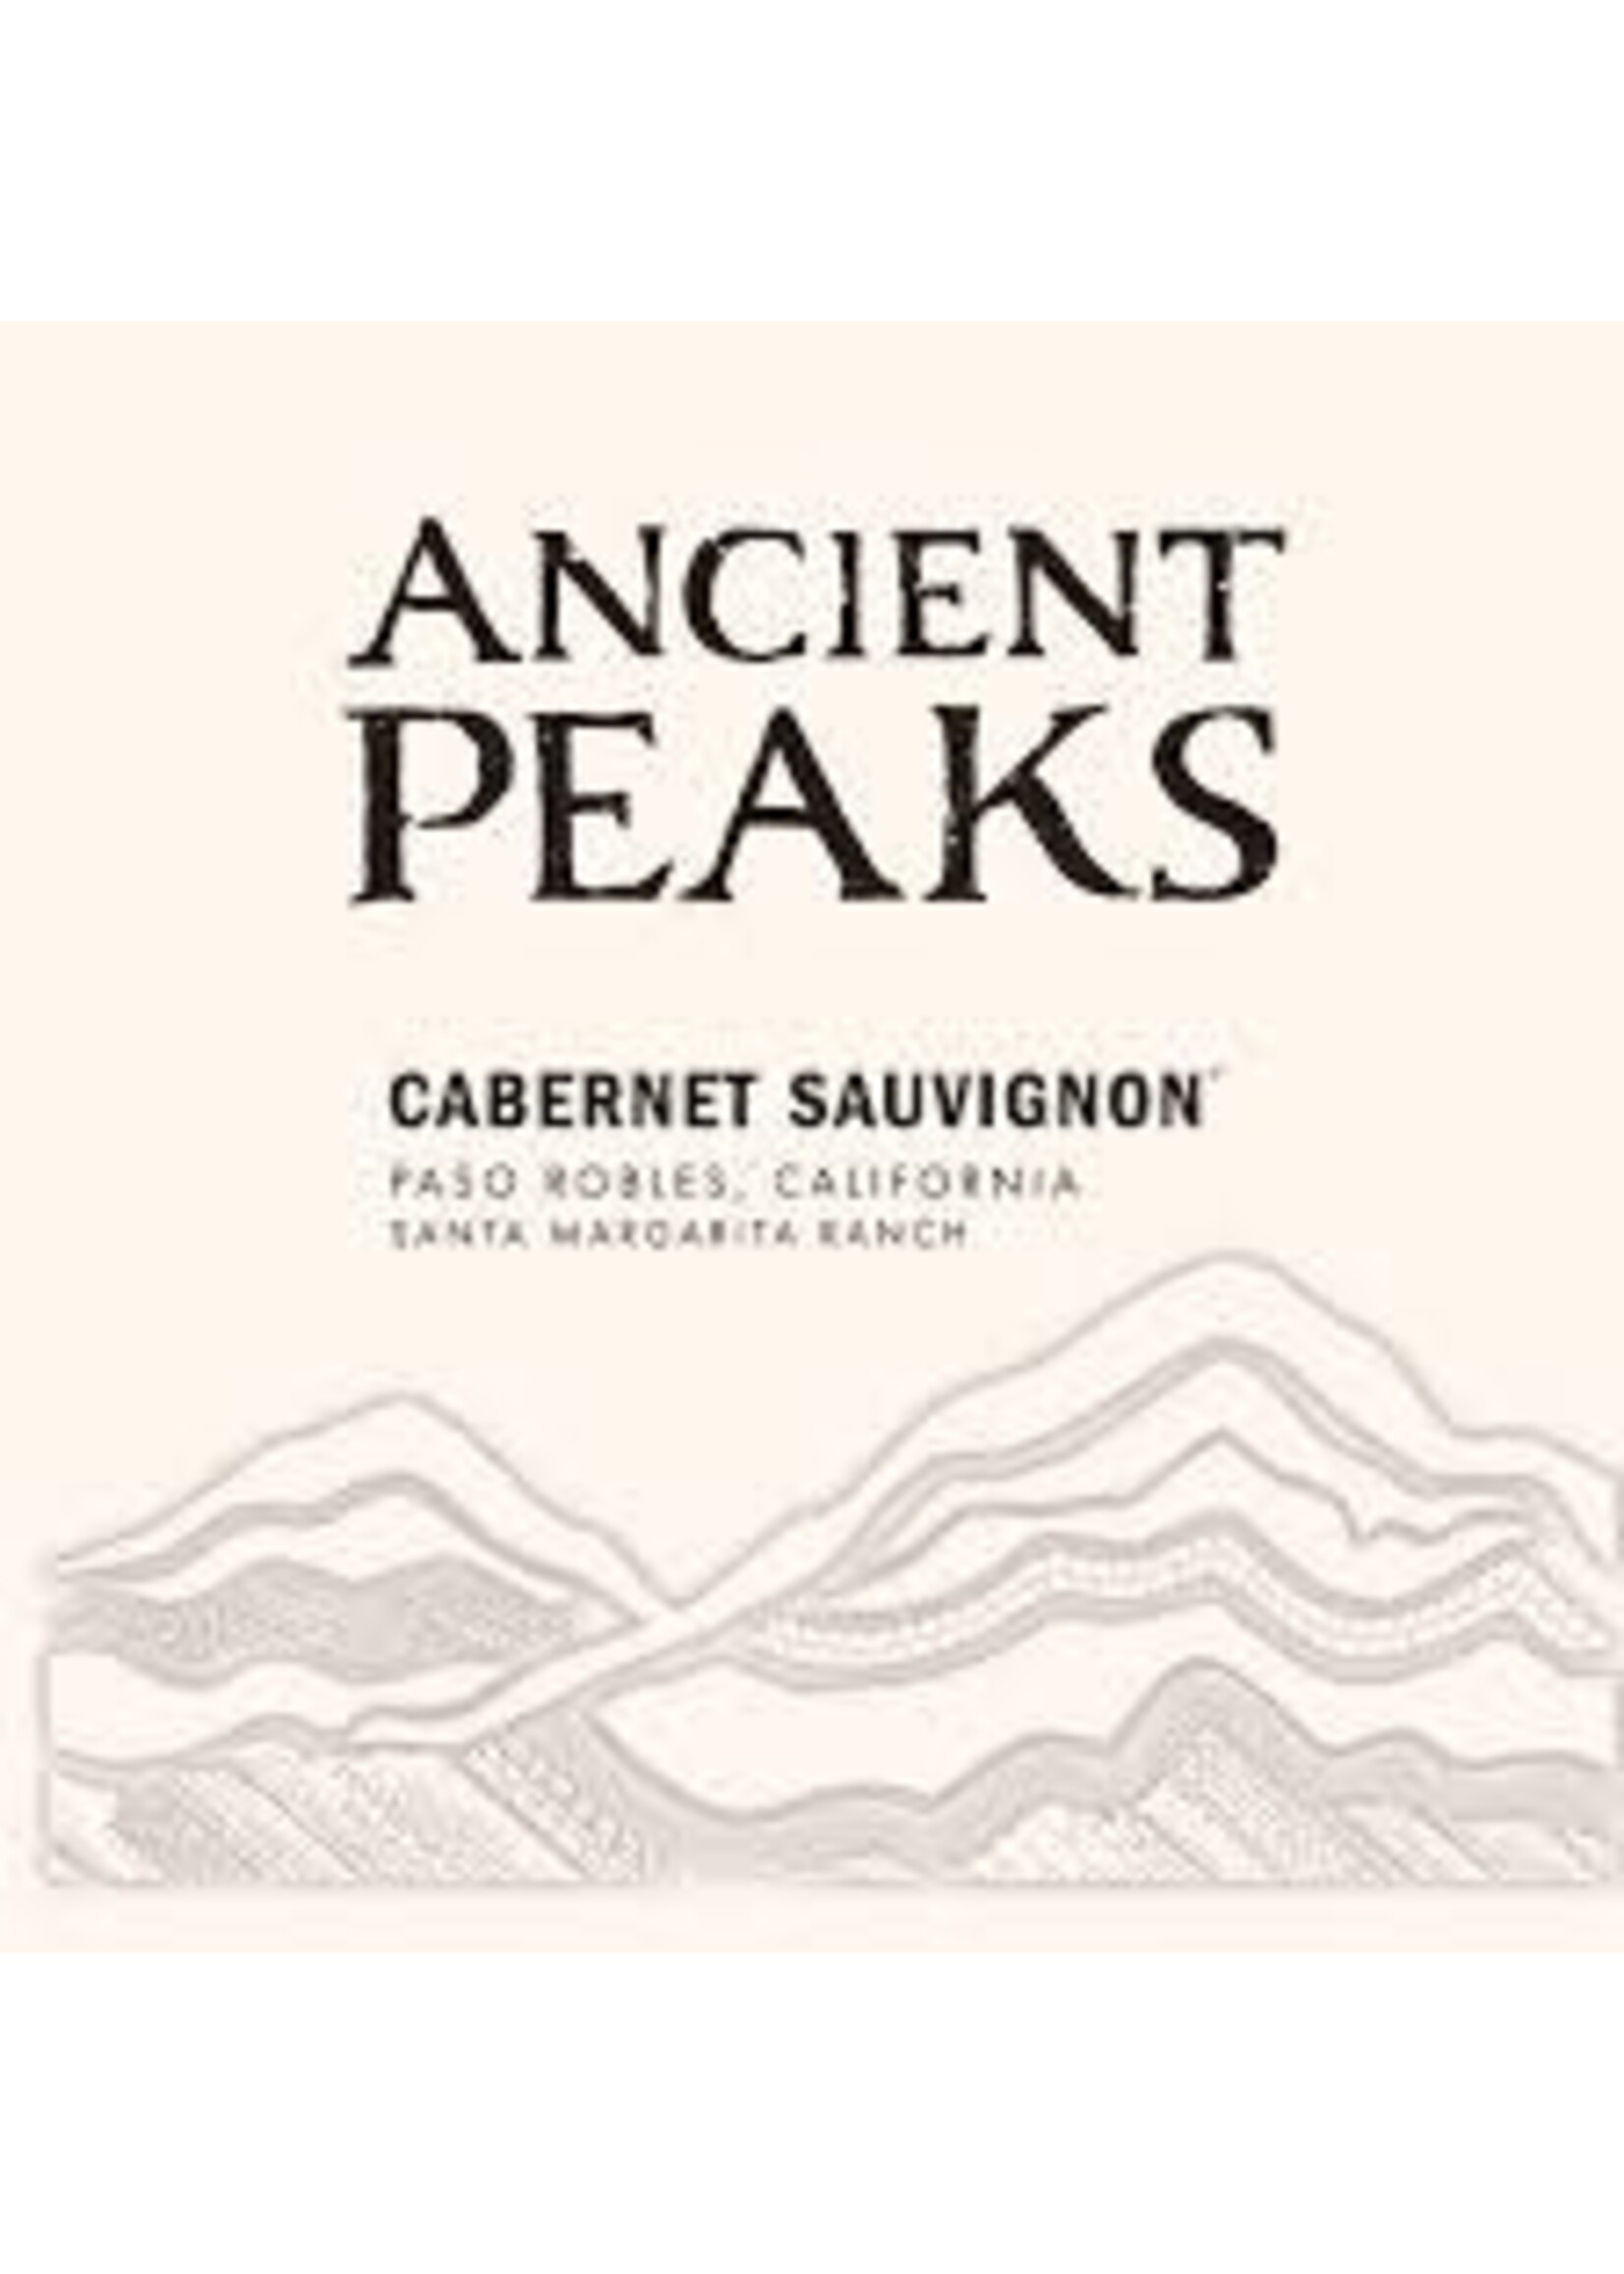 Ancient Peaks 2021 Cabernet Sauvignon 750ml